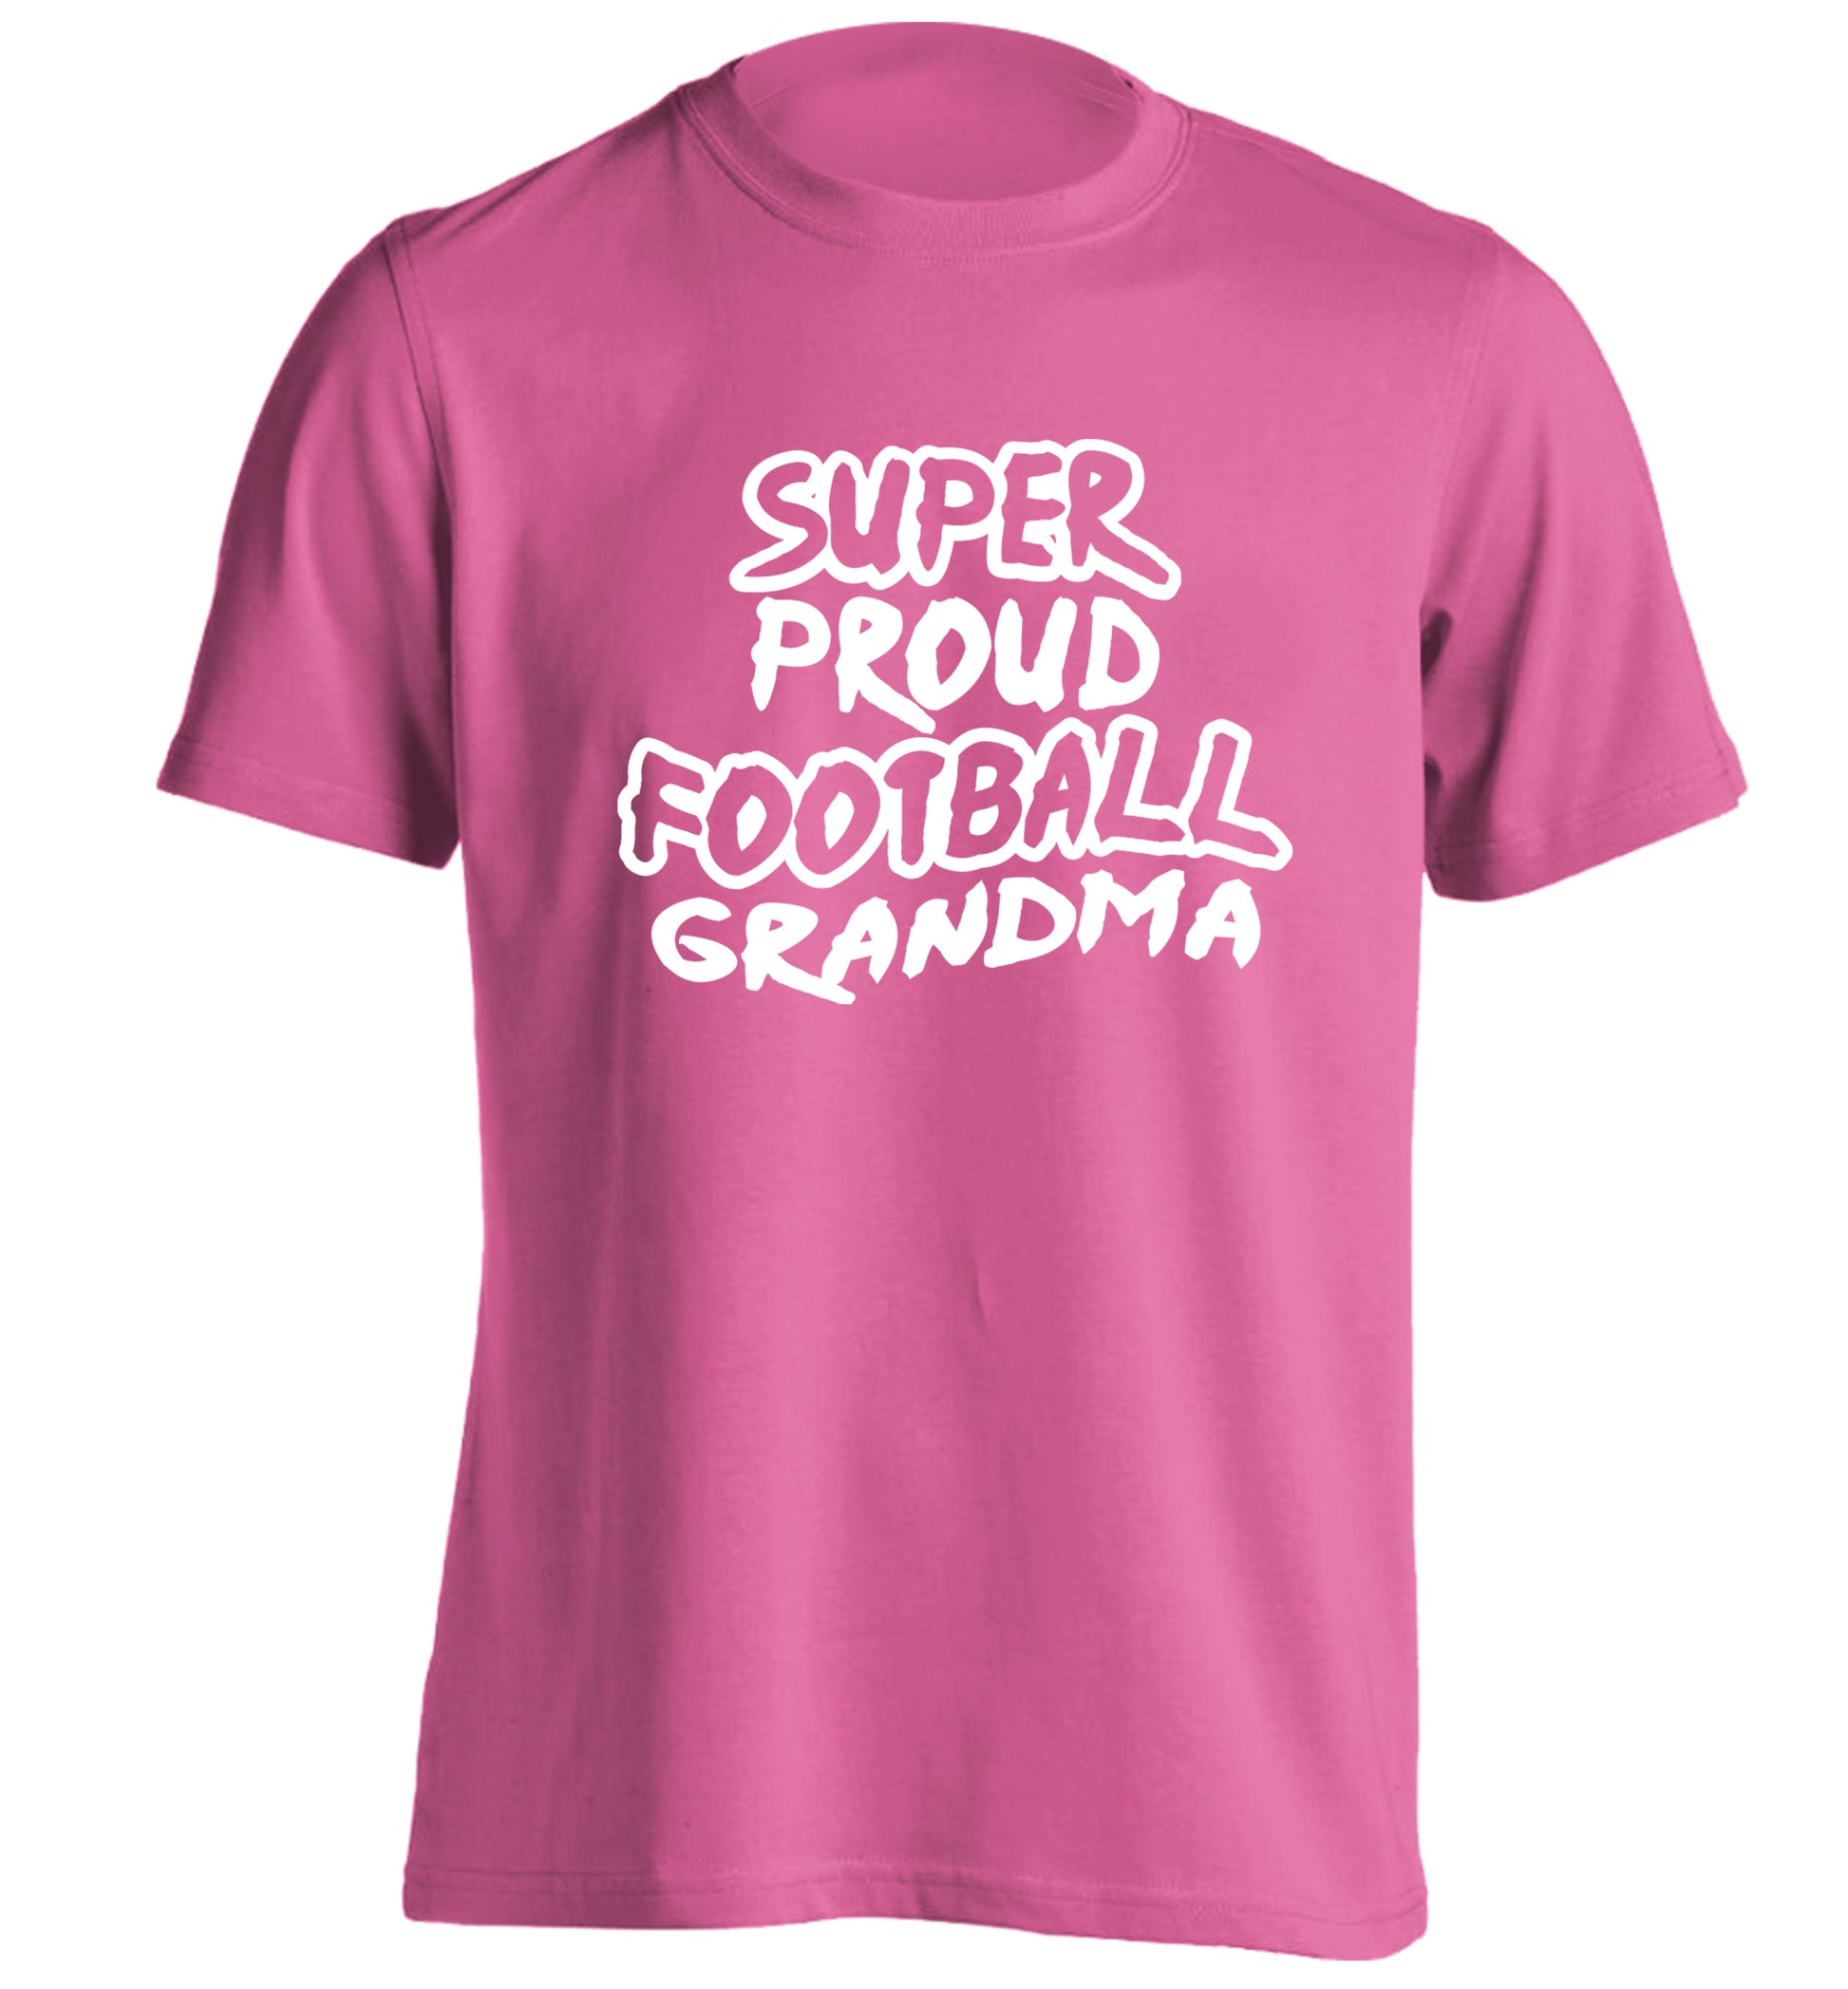 Super proud football grandma adults unisexpink Tshirt 2XL